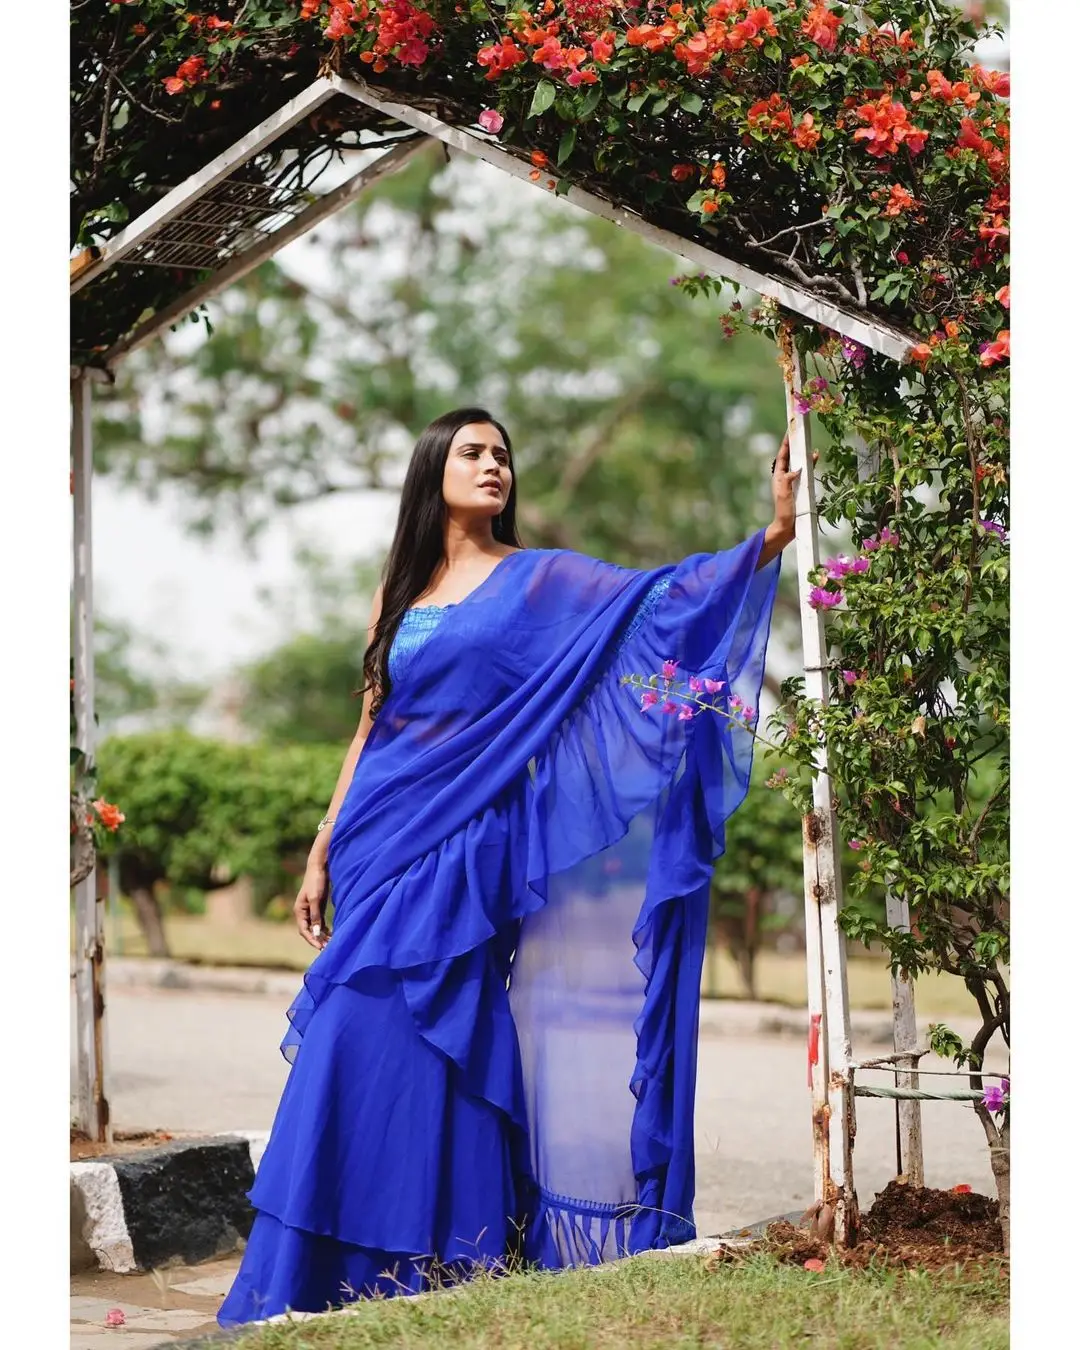 INDIAN GIRL KAVYA SHREE IN TRADITIONAL BLUE SAREE SLEEVELESS BLOUSE 4